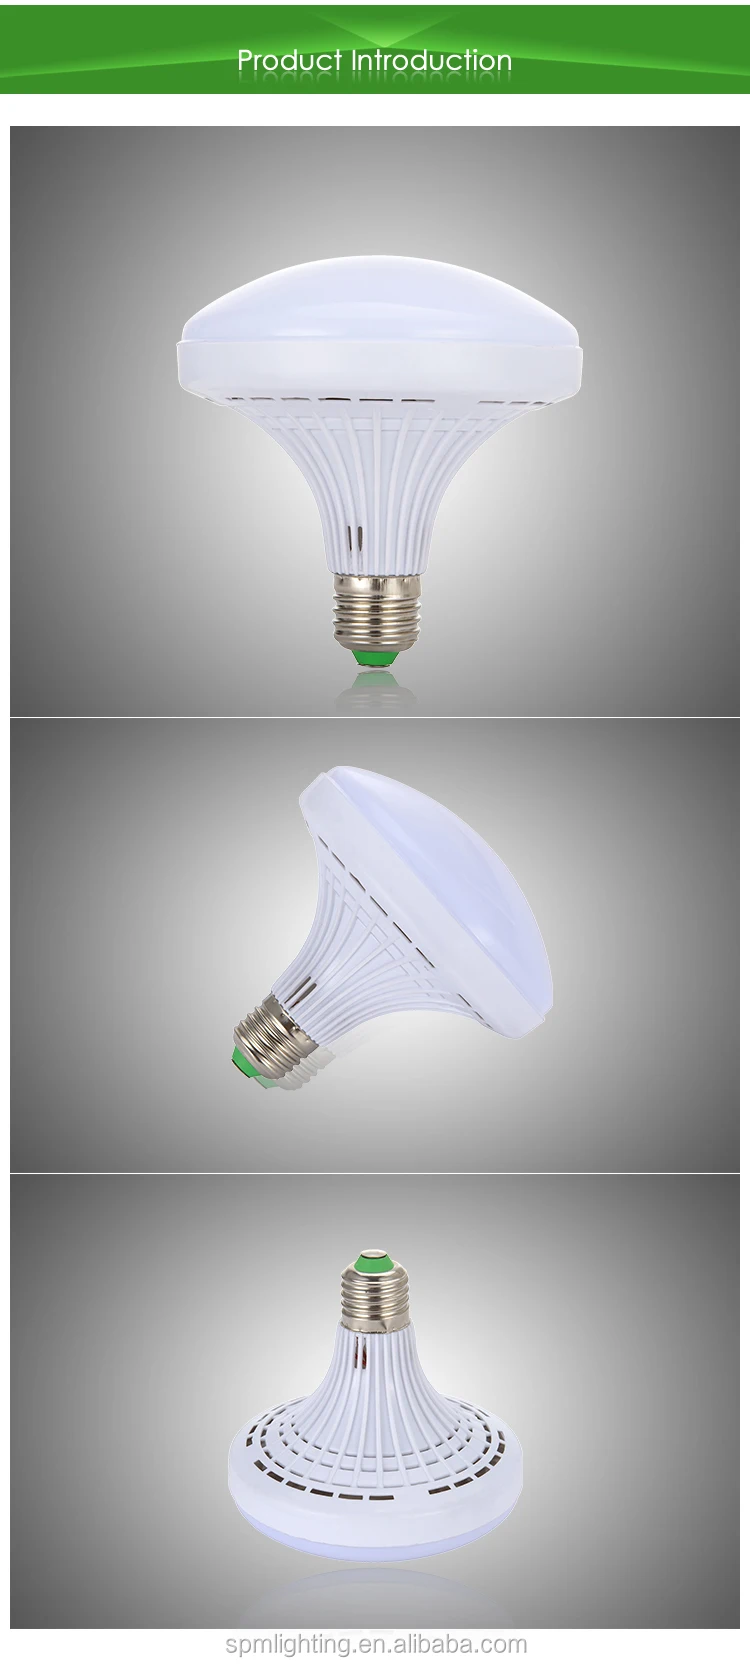 China led Cheap price e27 20w 36w ufo led high bay light bulb